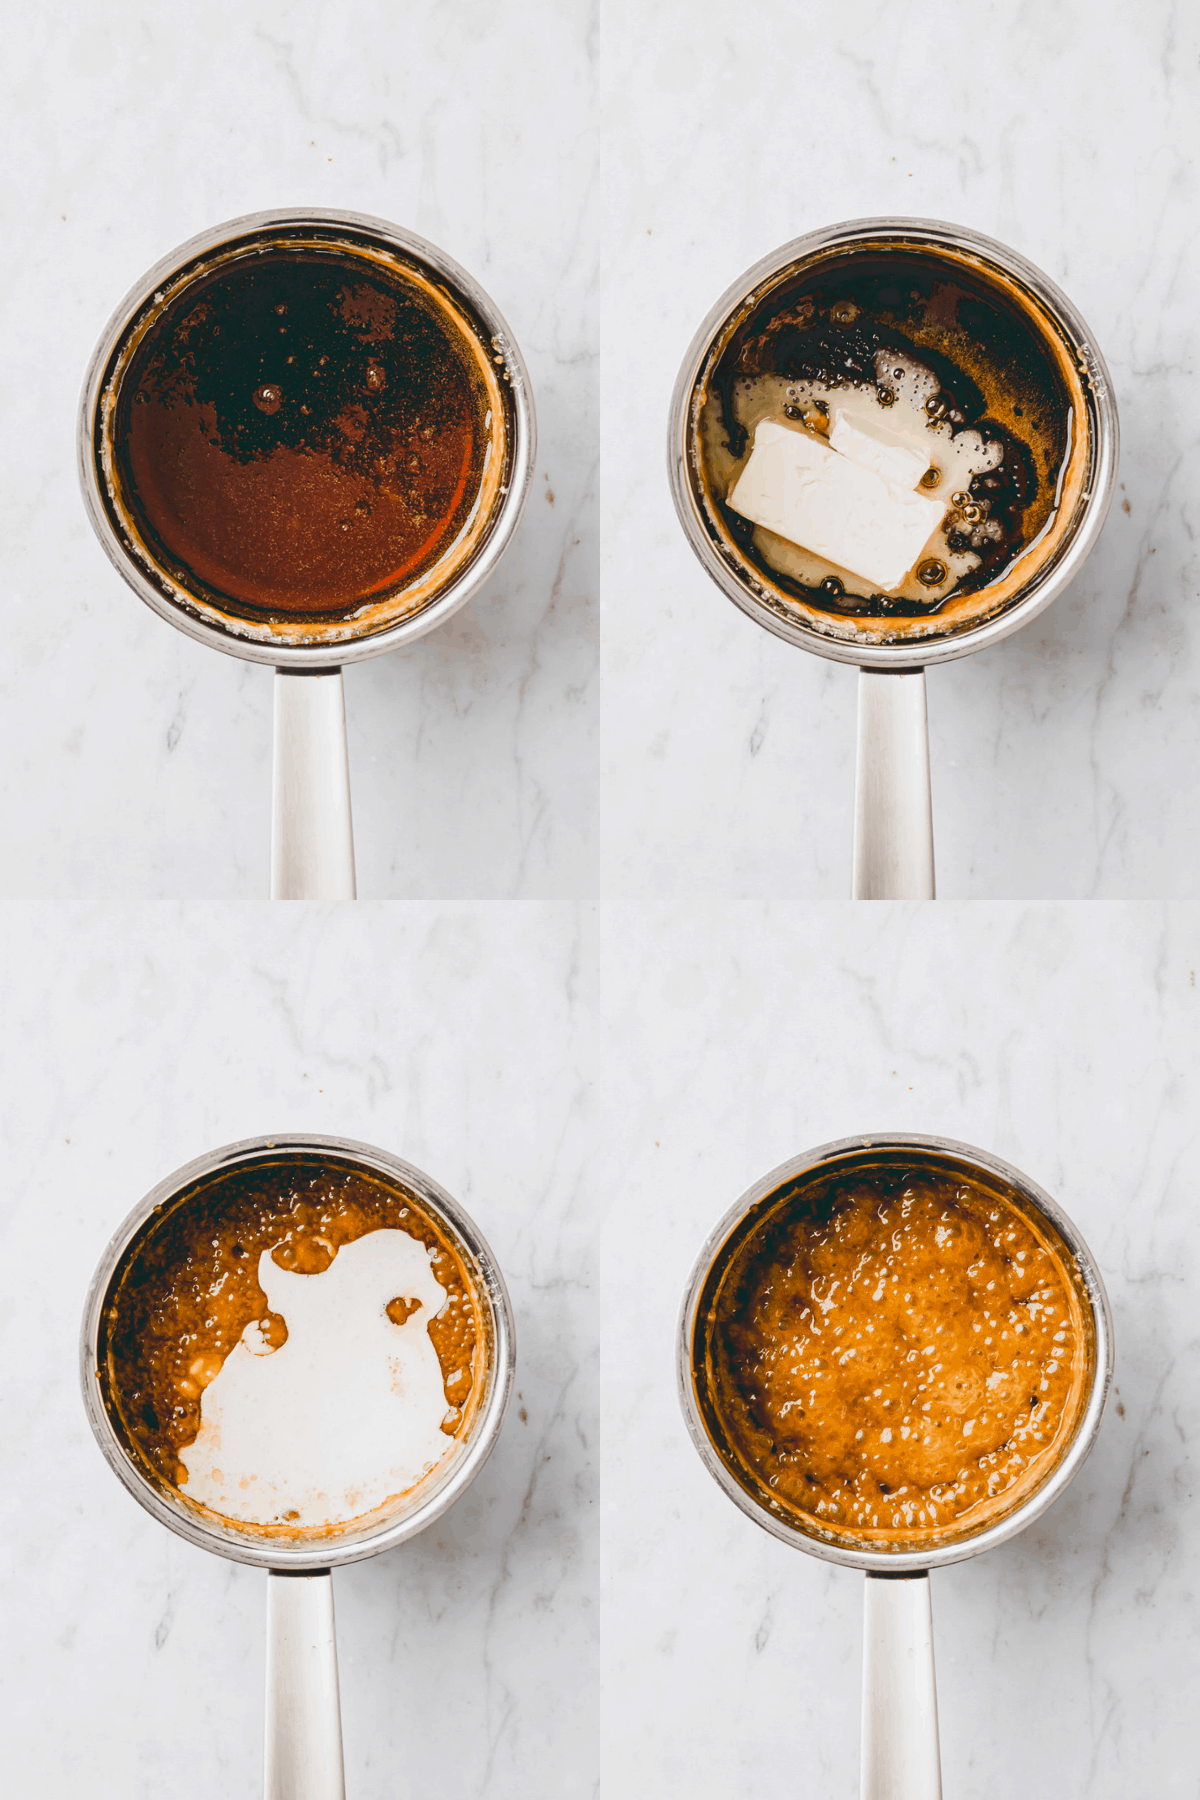 Salted Caramel Recipe Step 1-4